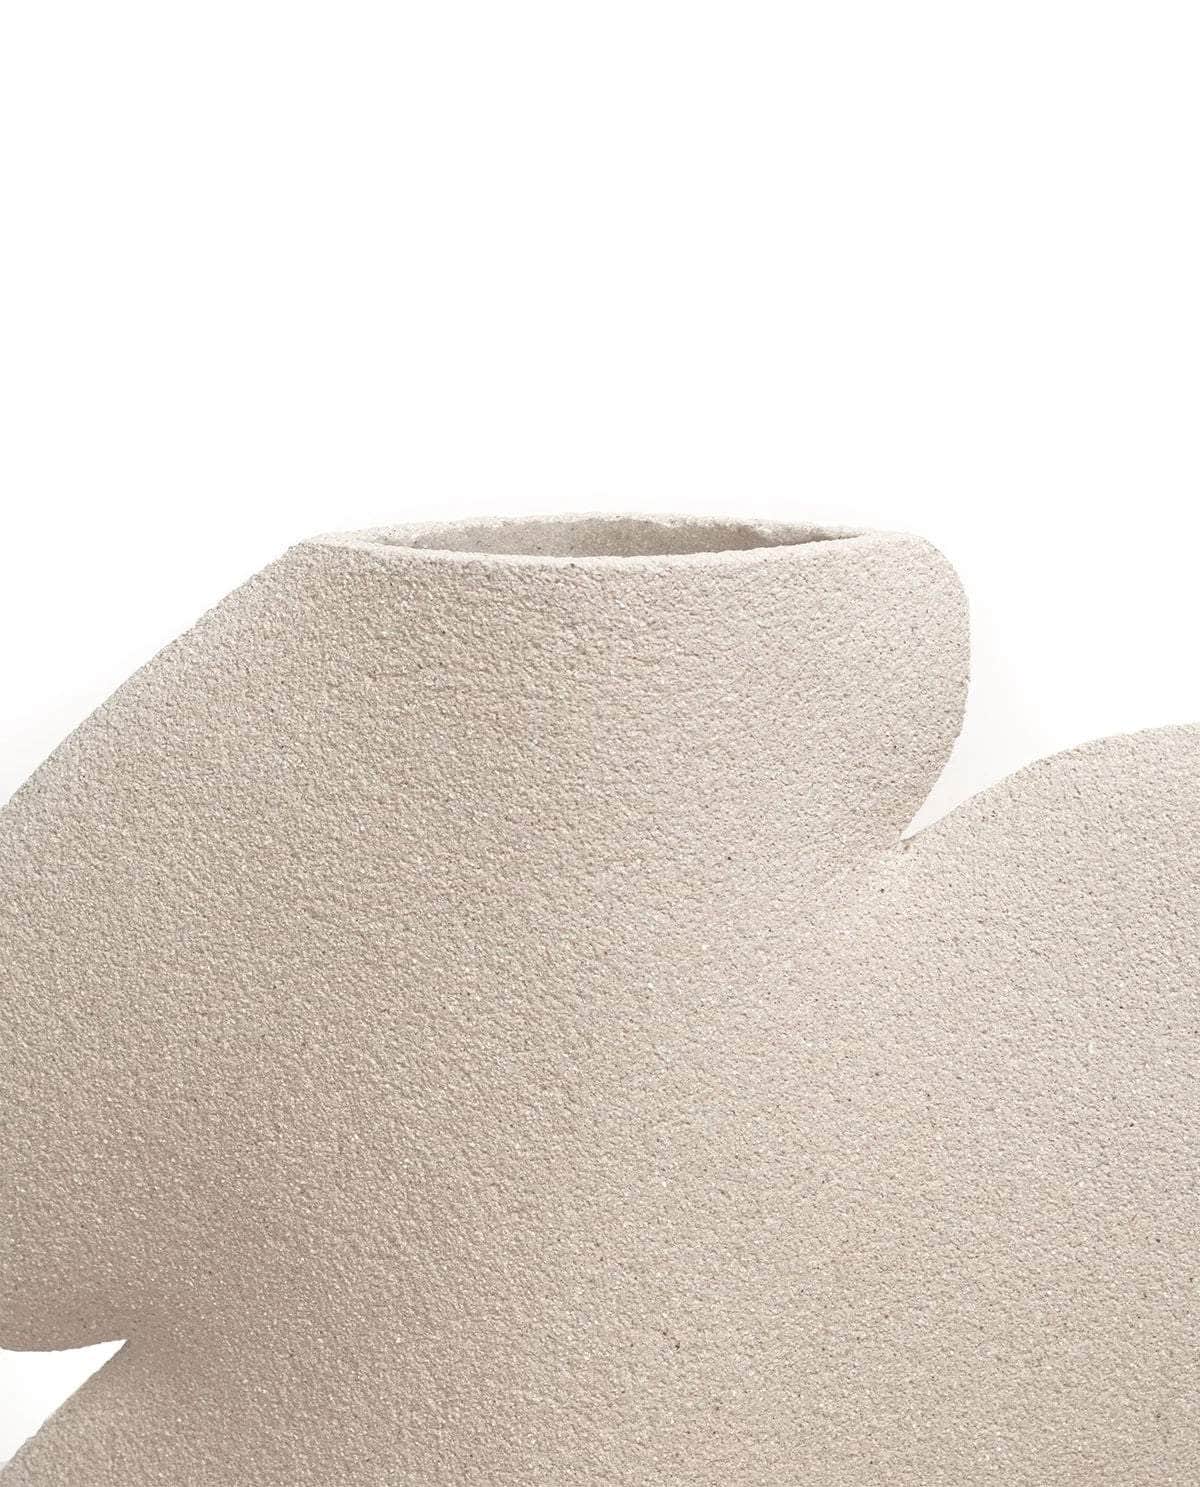 Ceramic Vase  ‘Ellipse N°2 - White’